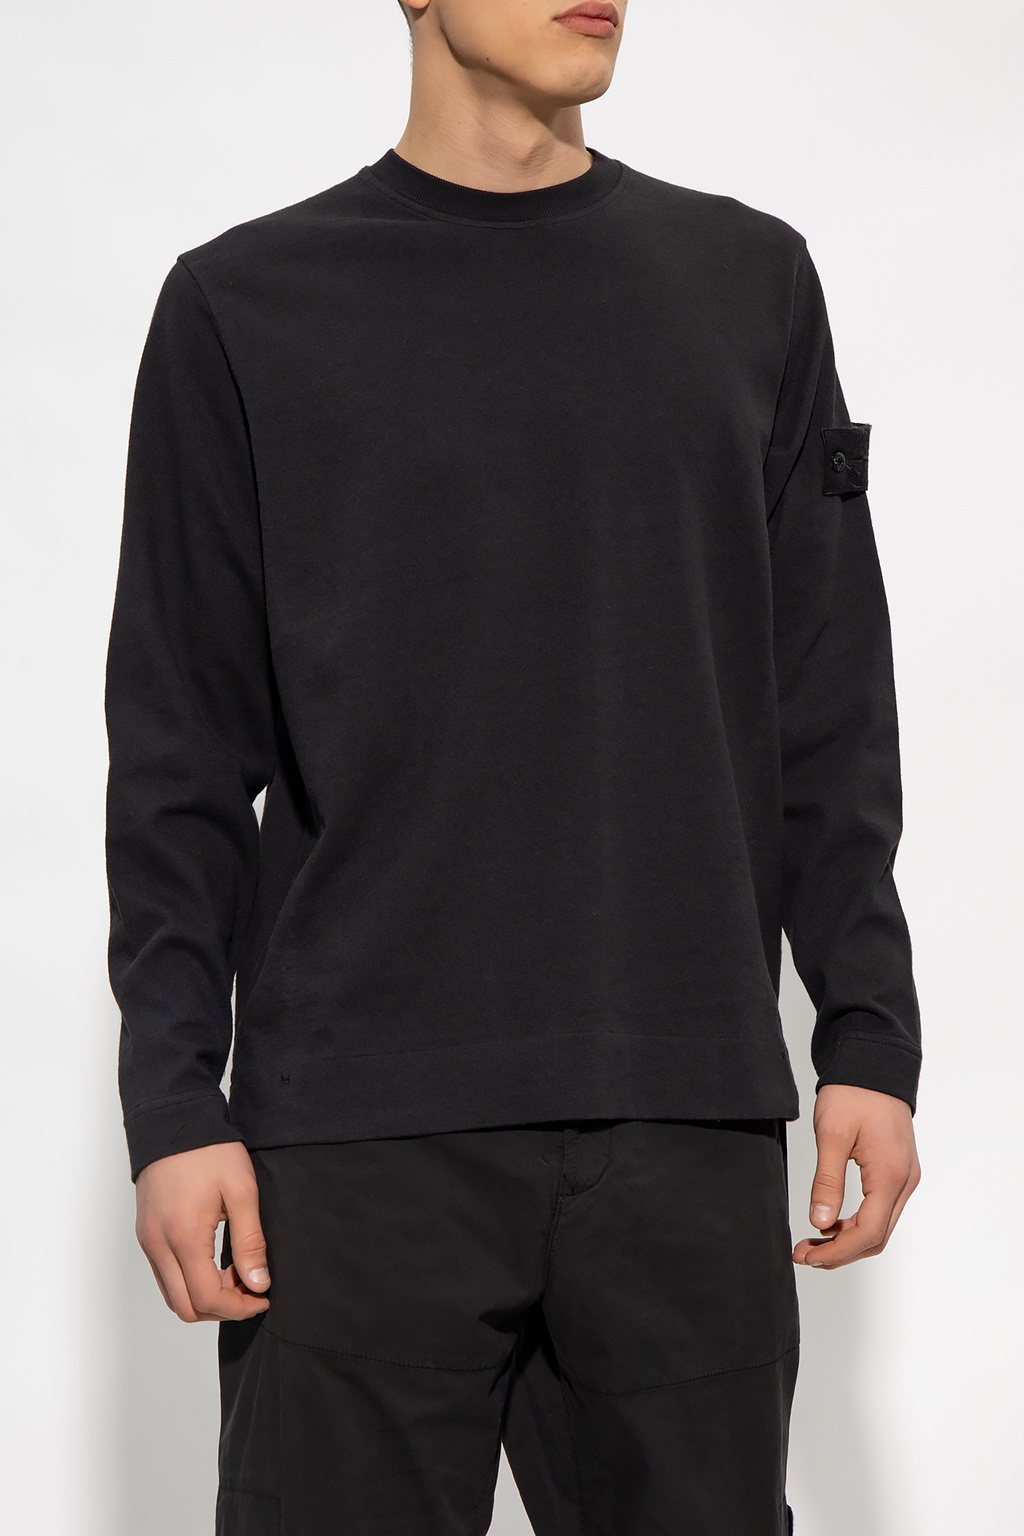 Black Sweatshirt with logo Stone Island - Vitkac GB